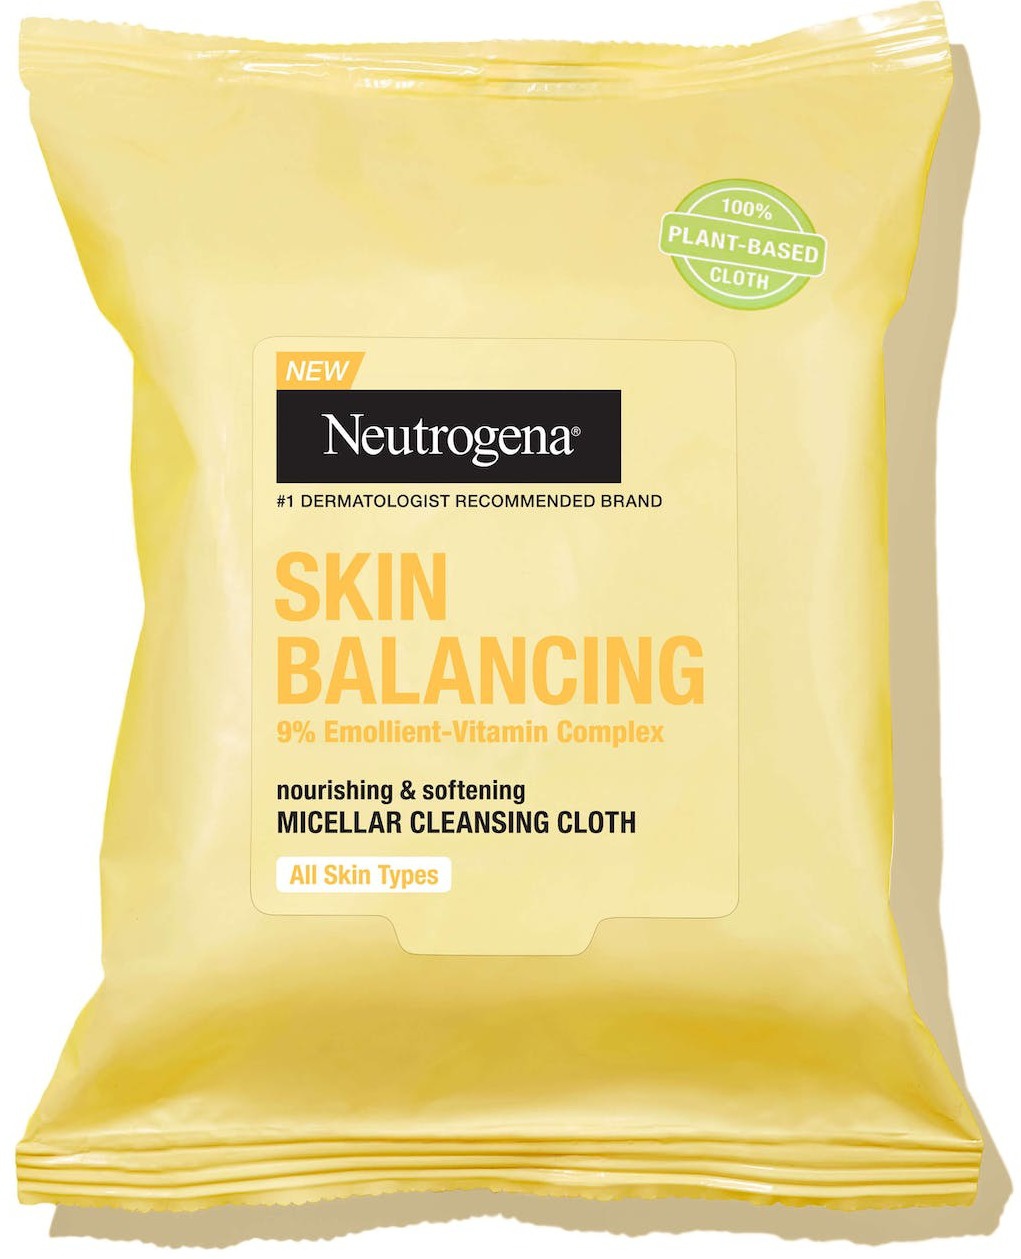 Neutrogena Skin Balancing Micellar Cleansing Cloths